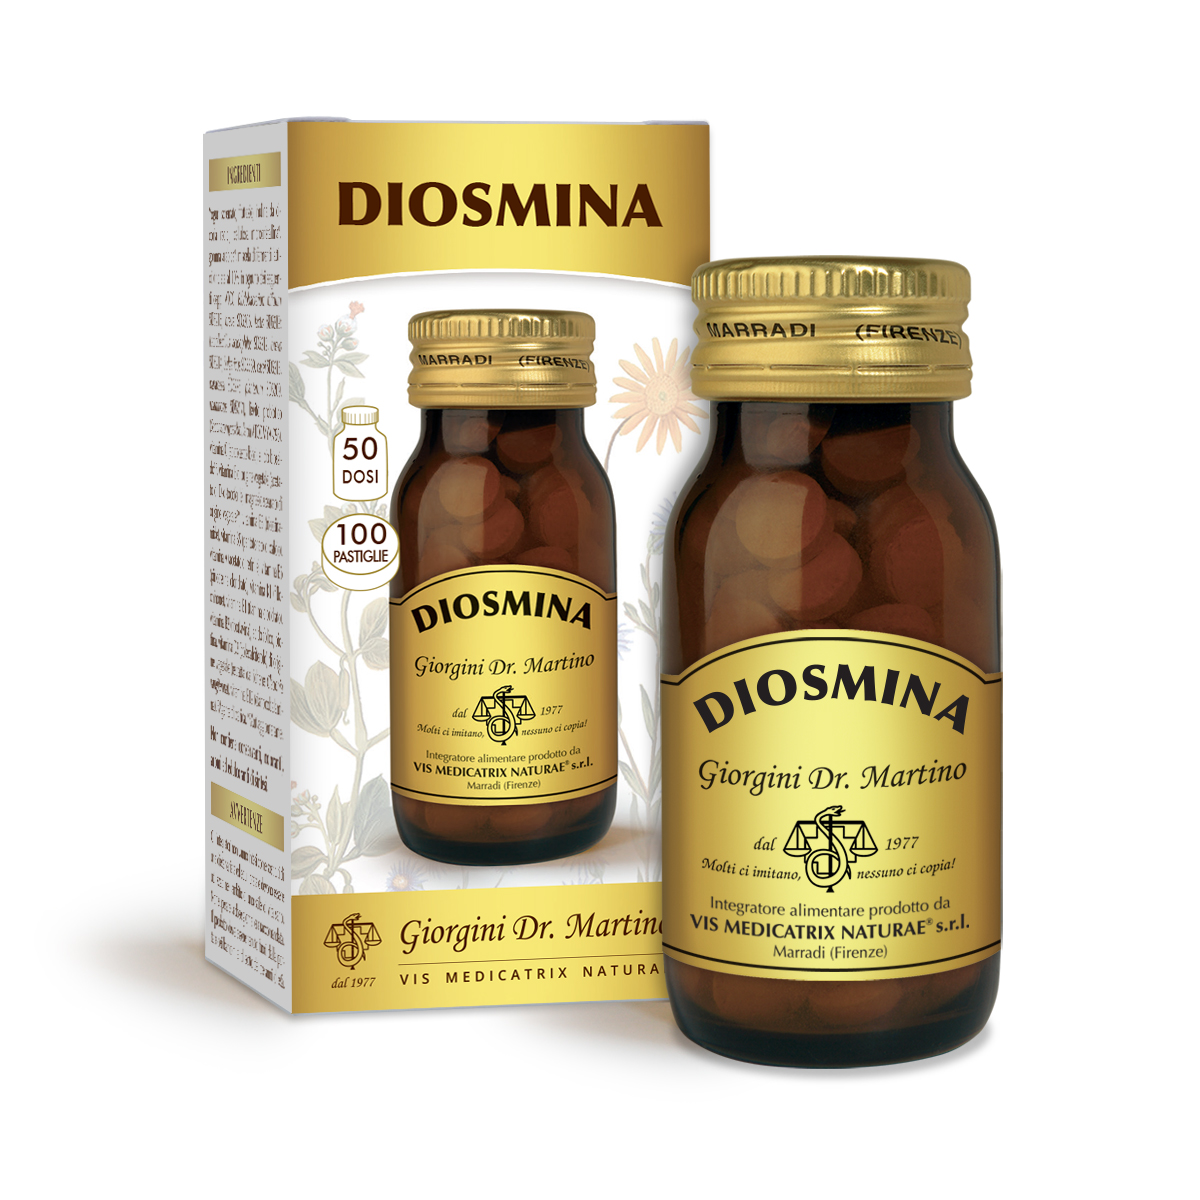 DIOSMINA 50 g - 100 pastiglieda 500 mg